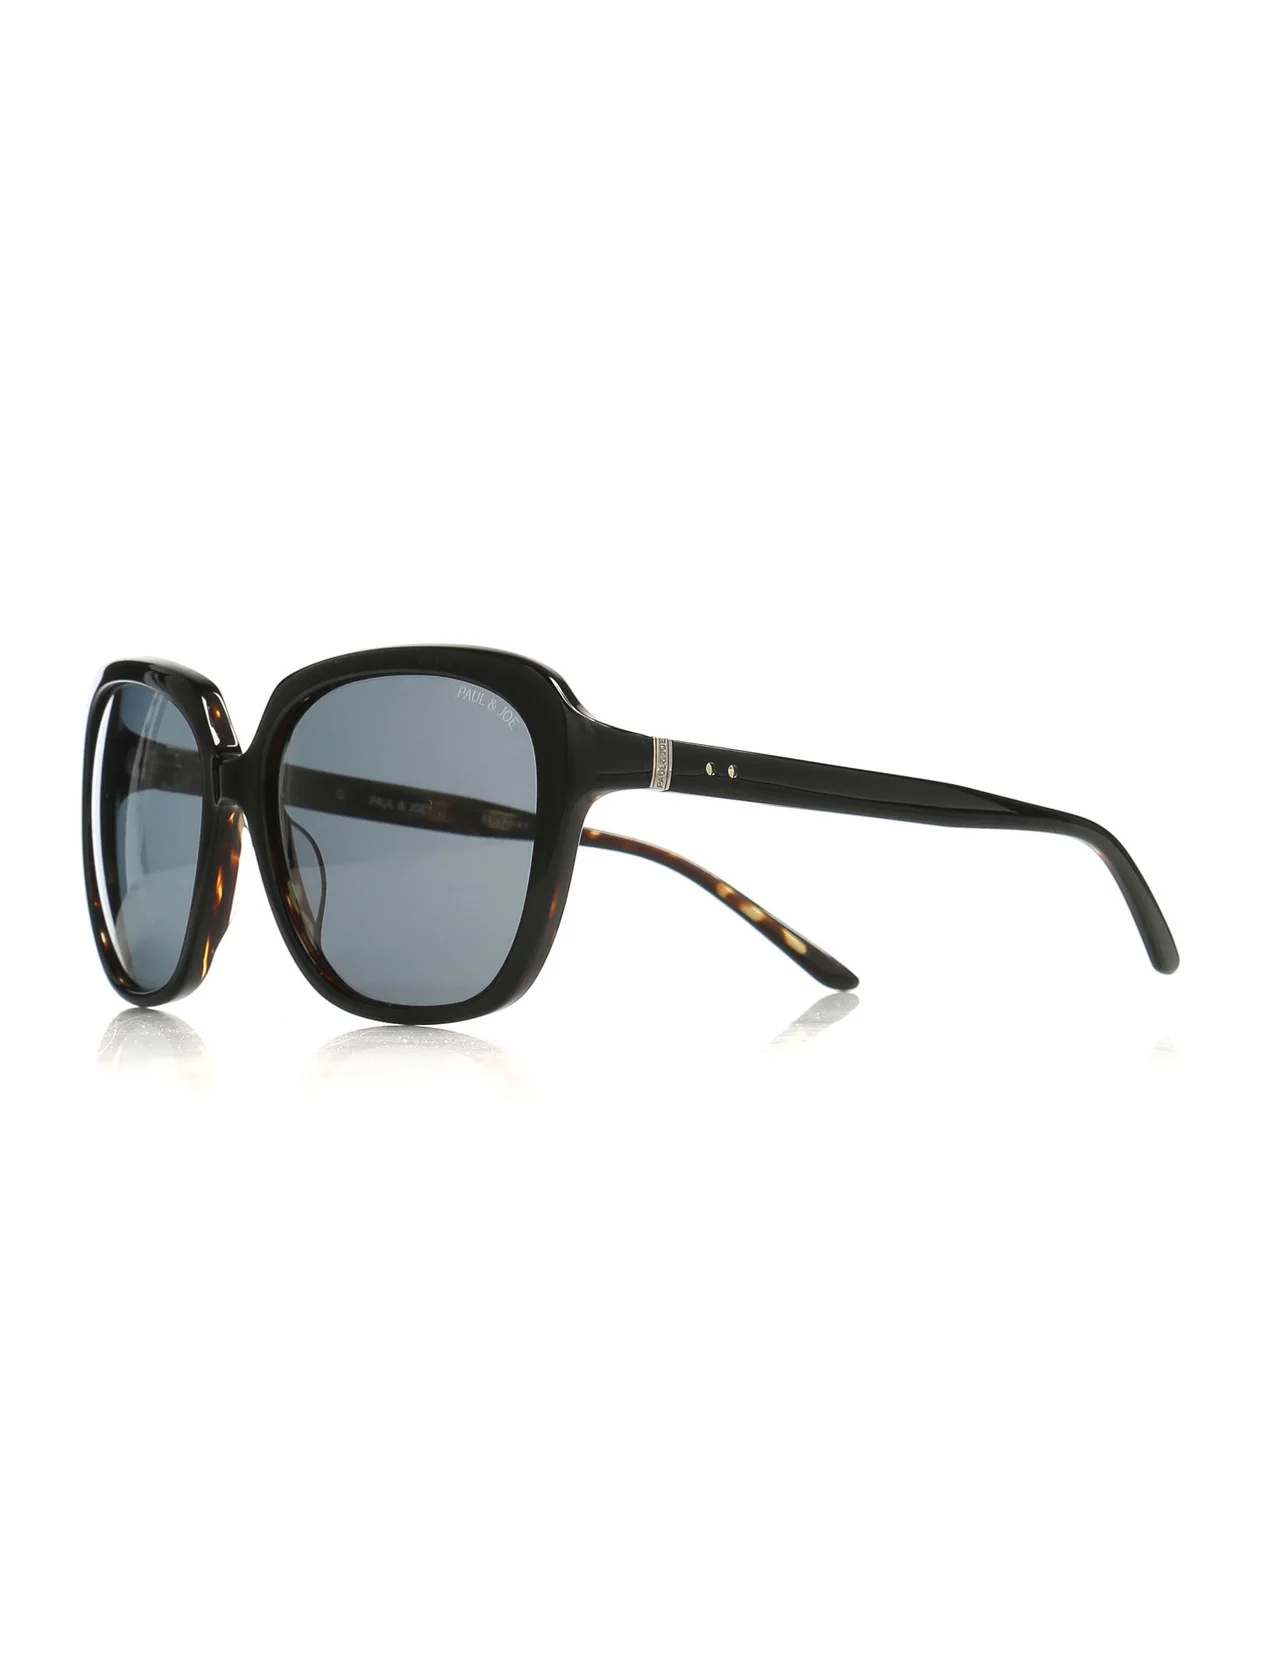 

Women's sunglasses pj oceane 01 noec bone black organic oval aval 58-17-135 paul / joe